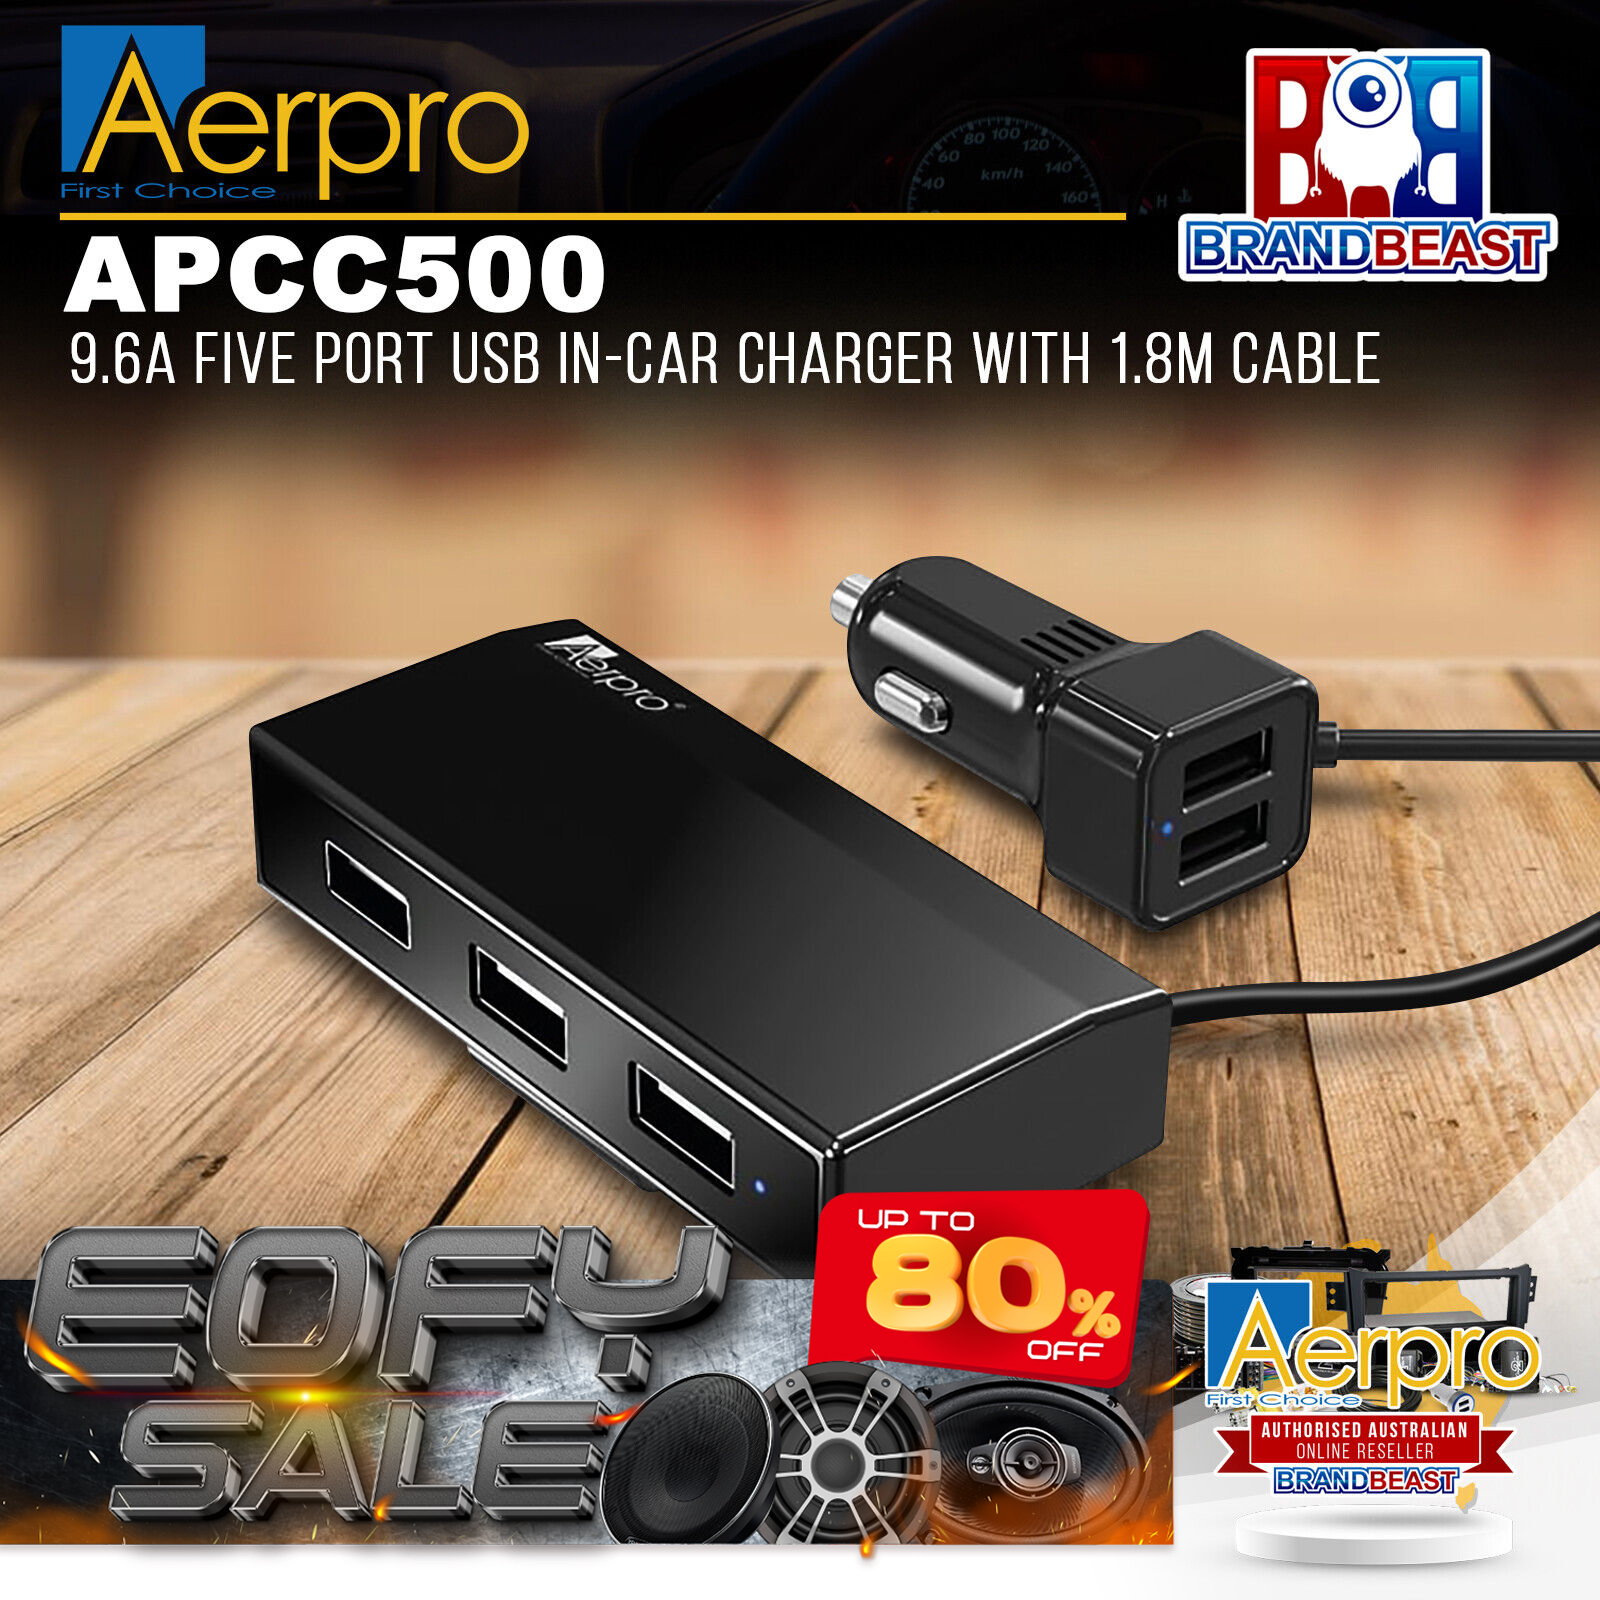 APCC500